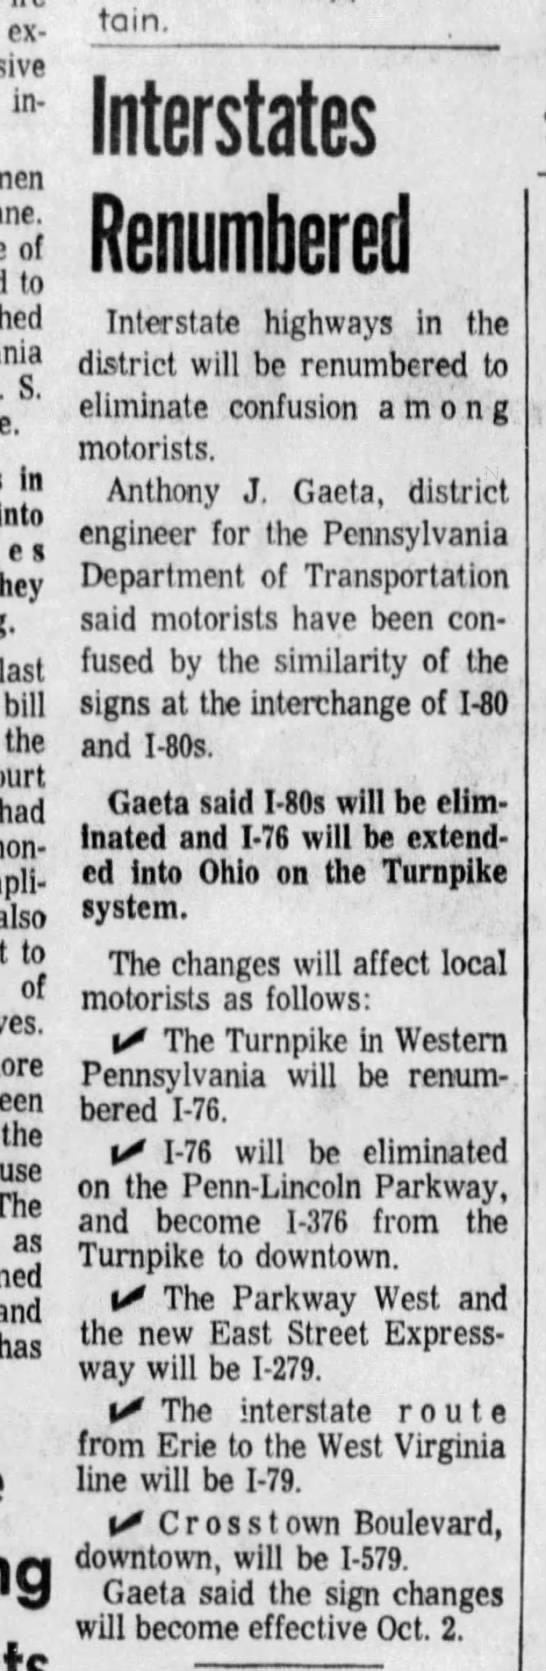 Interstates redone 10/2/72, February 24, 1972 - 